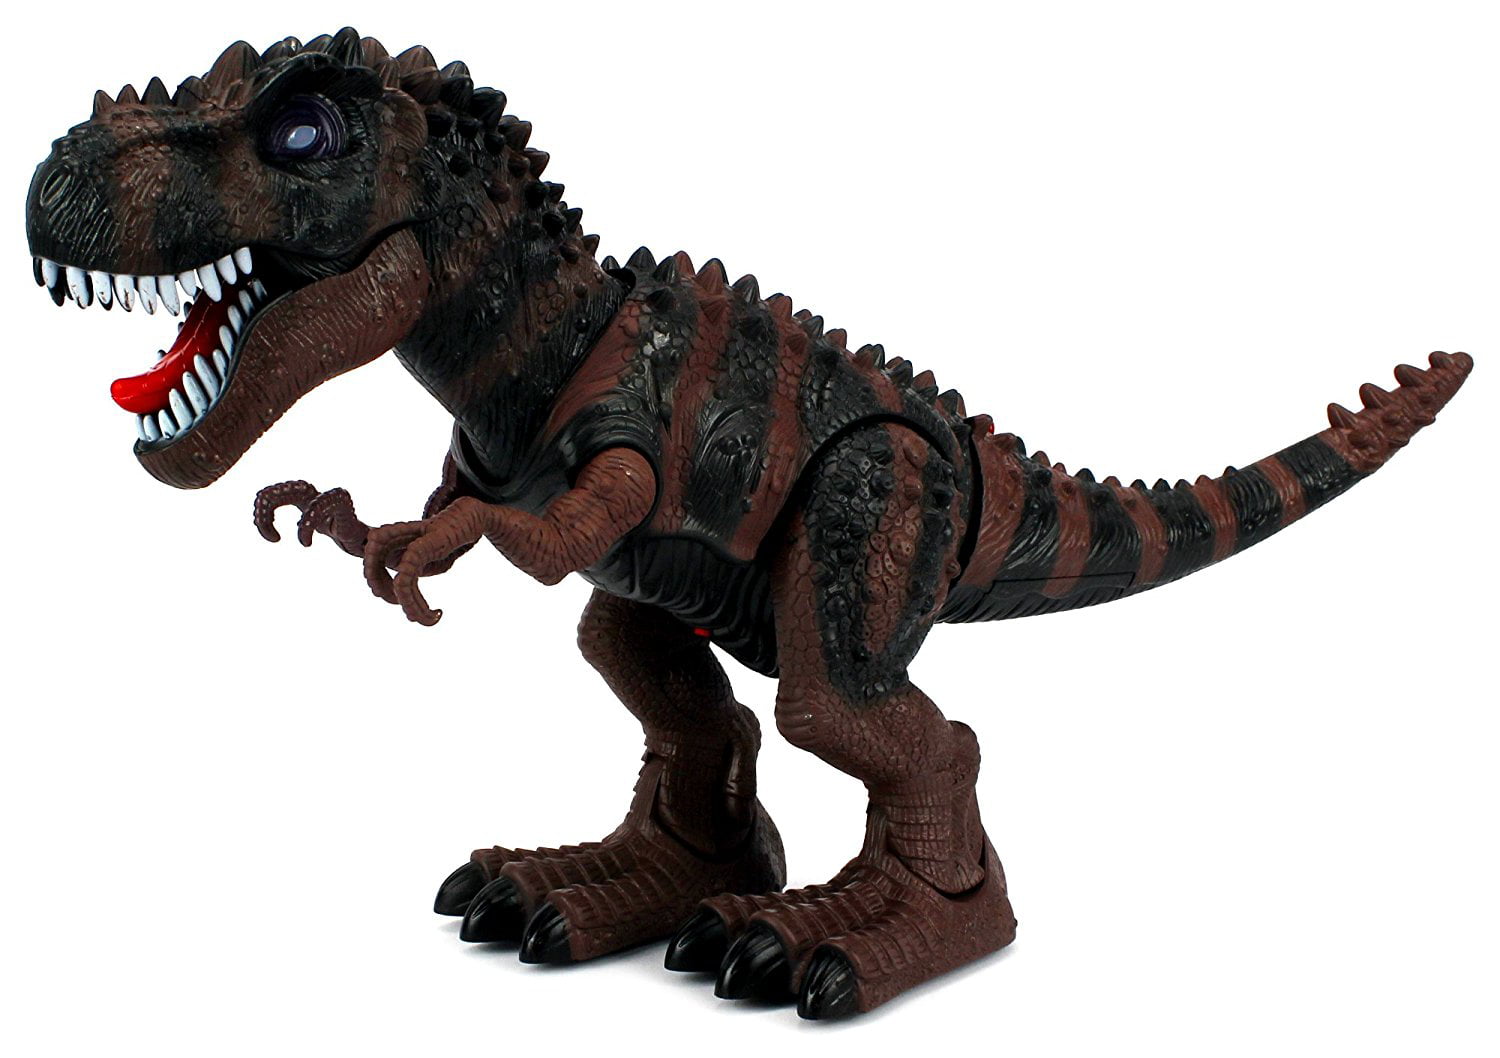 Dinosaur Century Tyrannosaurus Rex T Rex Battery Operated Toy Dinosaur Figure W Realistic Movement Lights And Sounds Colors May Vary Walmart Com Walmart Com